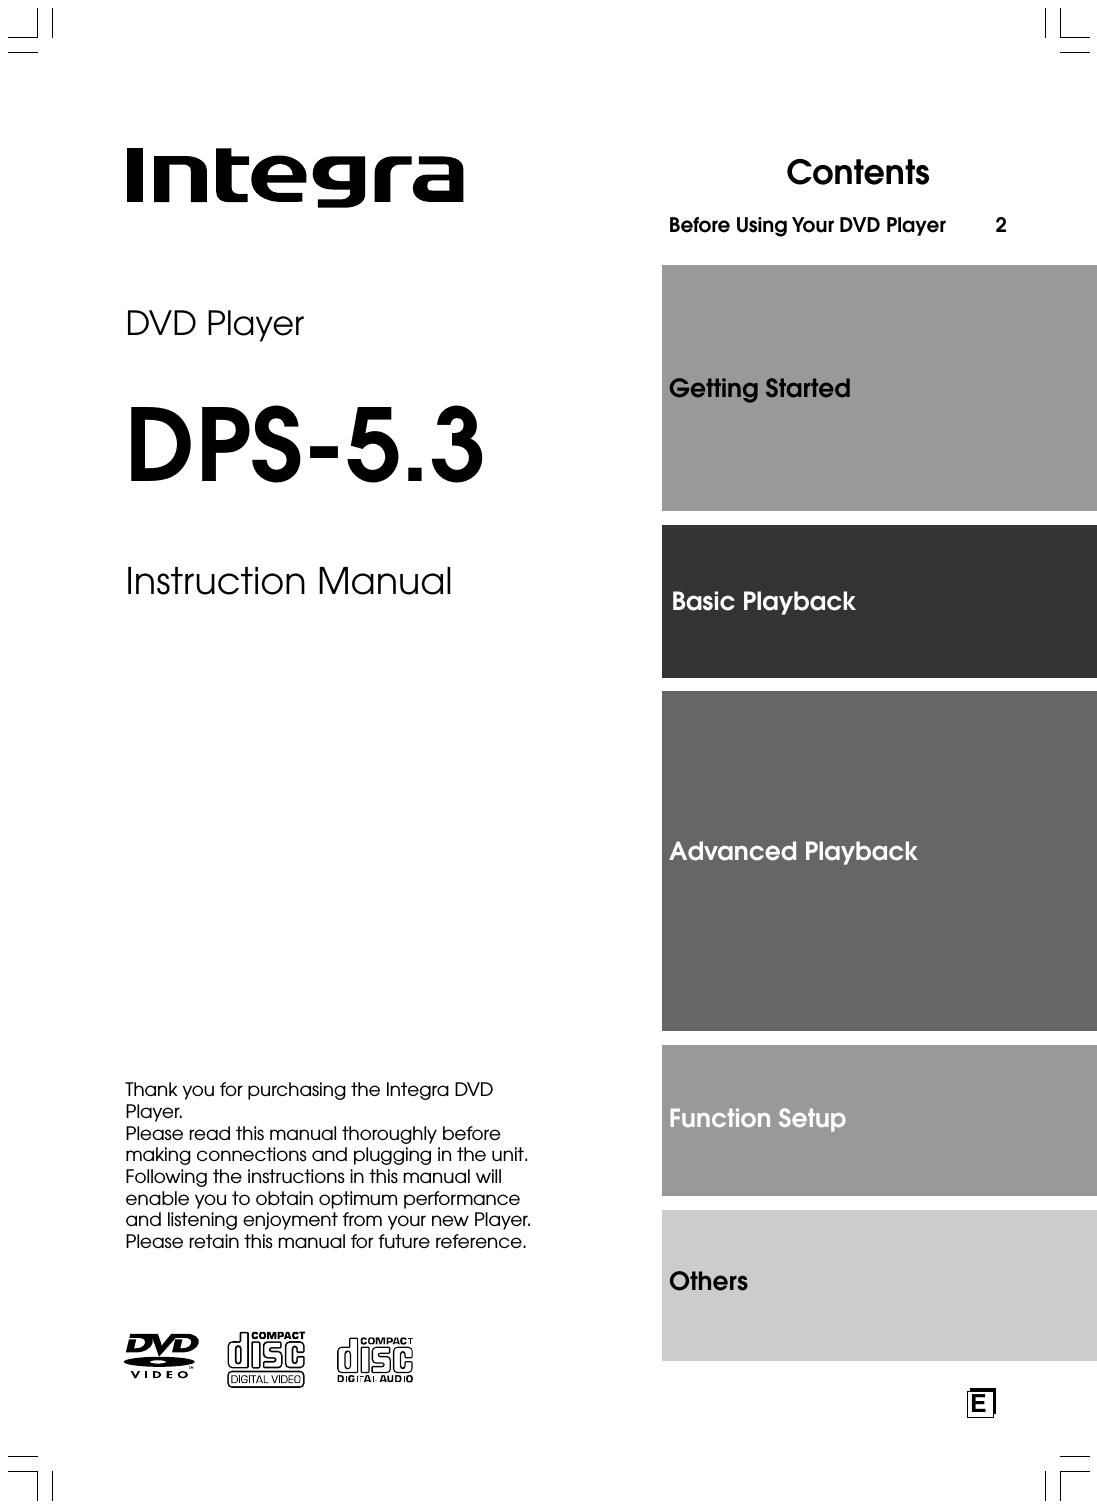 integra dps 5 3 owners manual